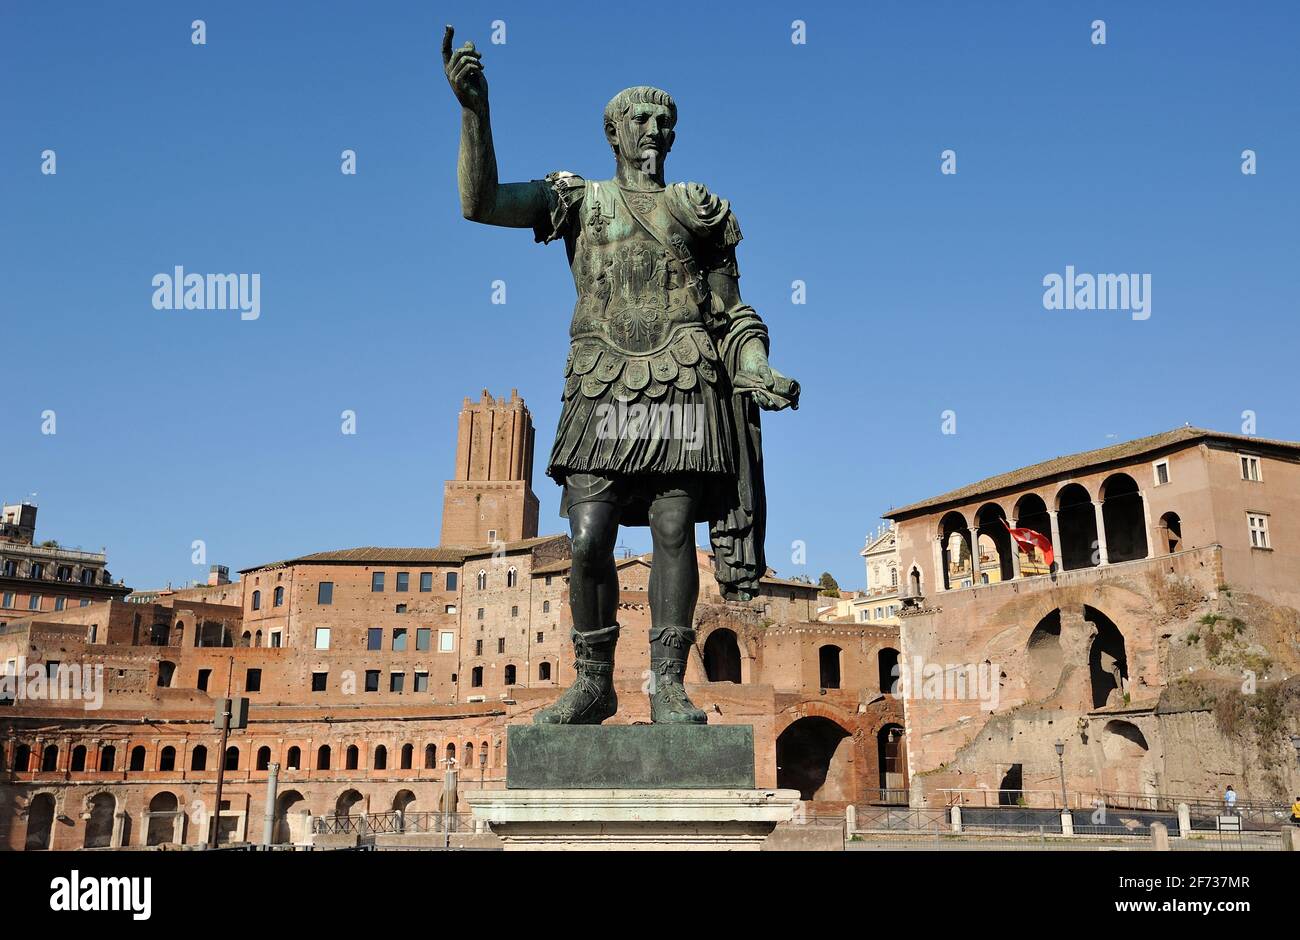 Italy, Rome, bronze statue of the roman emperor Trajan and Trajan's markets Stock Photo